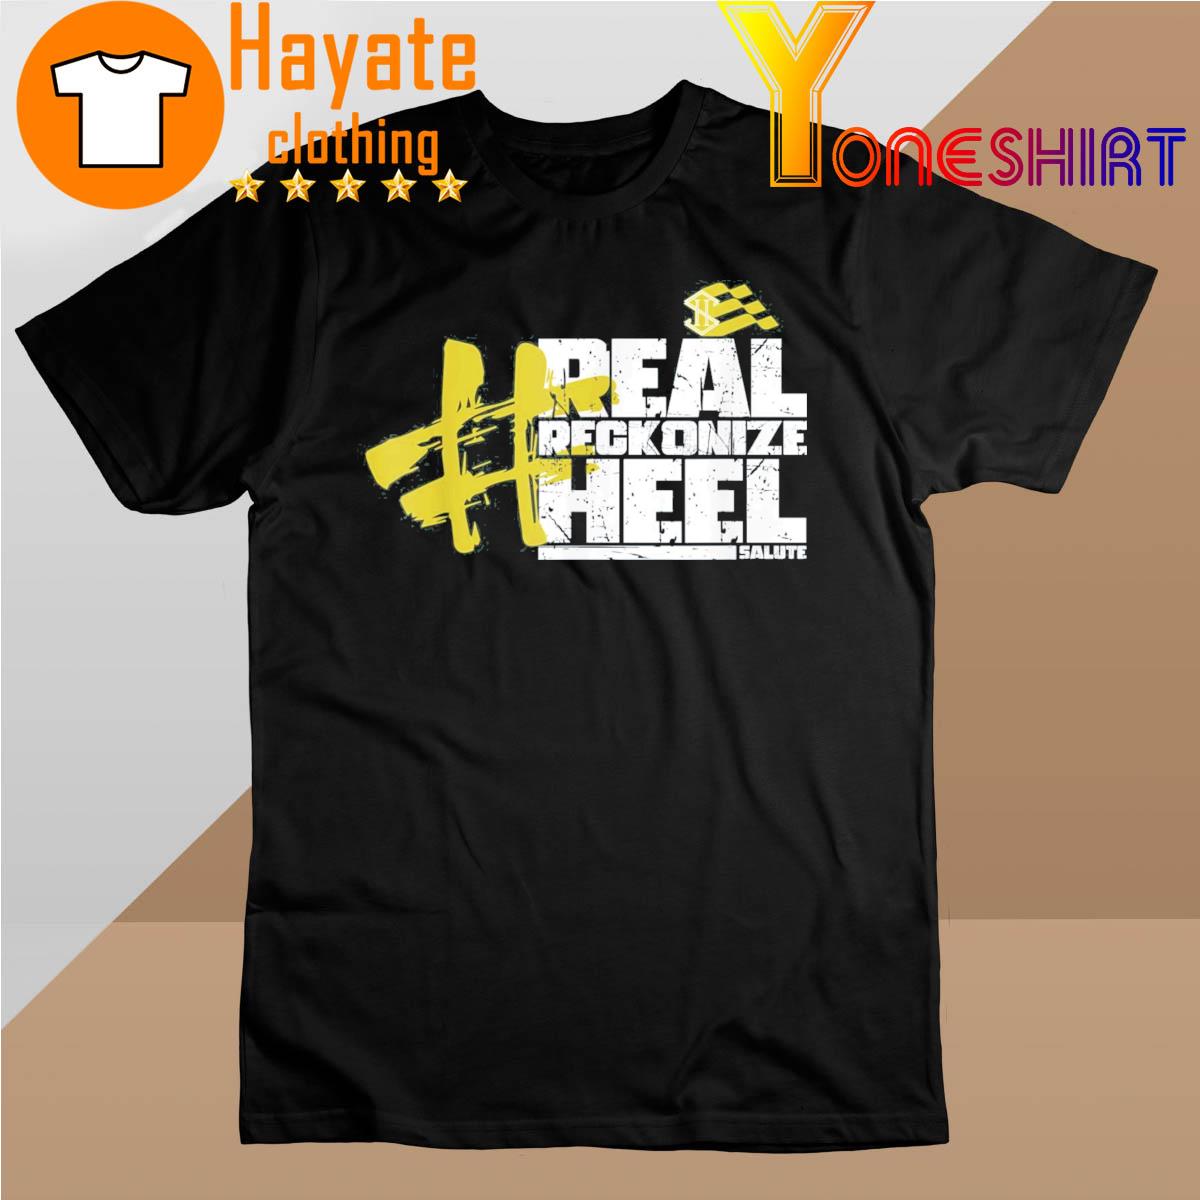 Real Reckonize Heel Salute Shirt